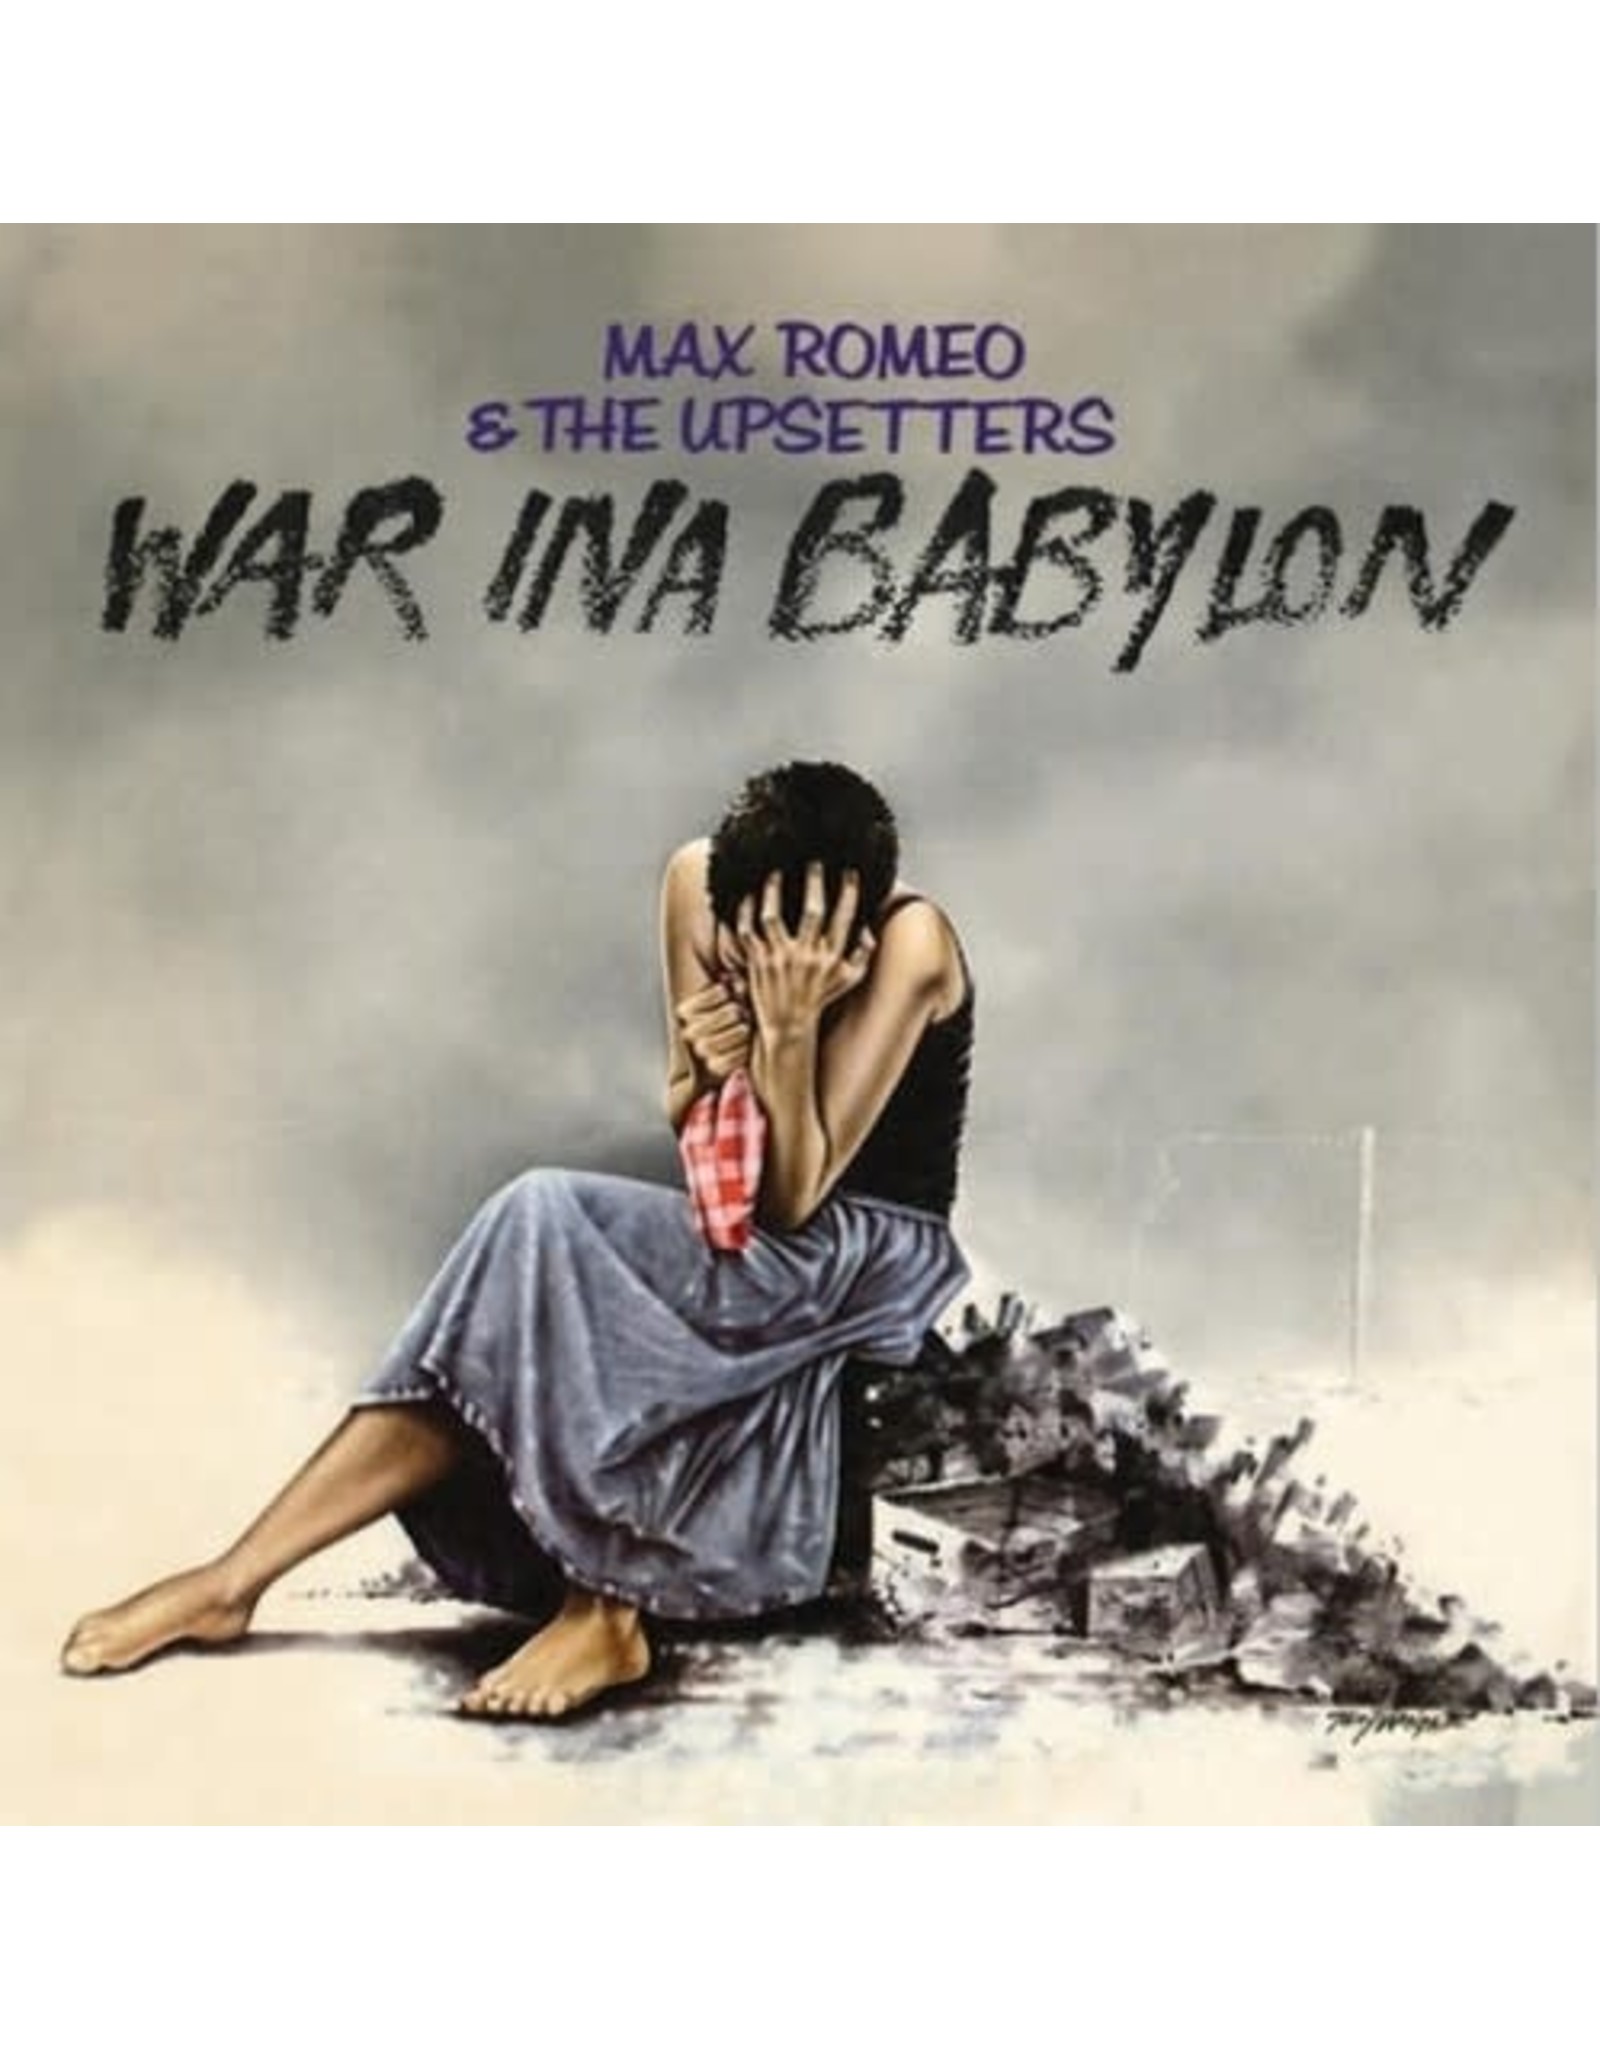 New Vinyl Max Romeo - War In Babylon (Red) LP